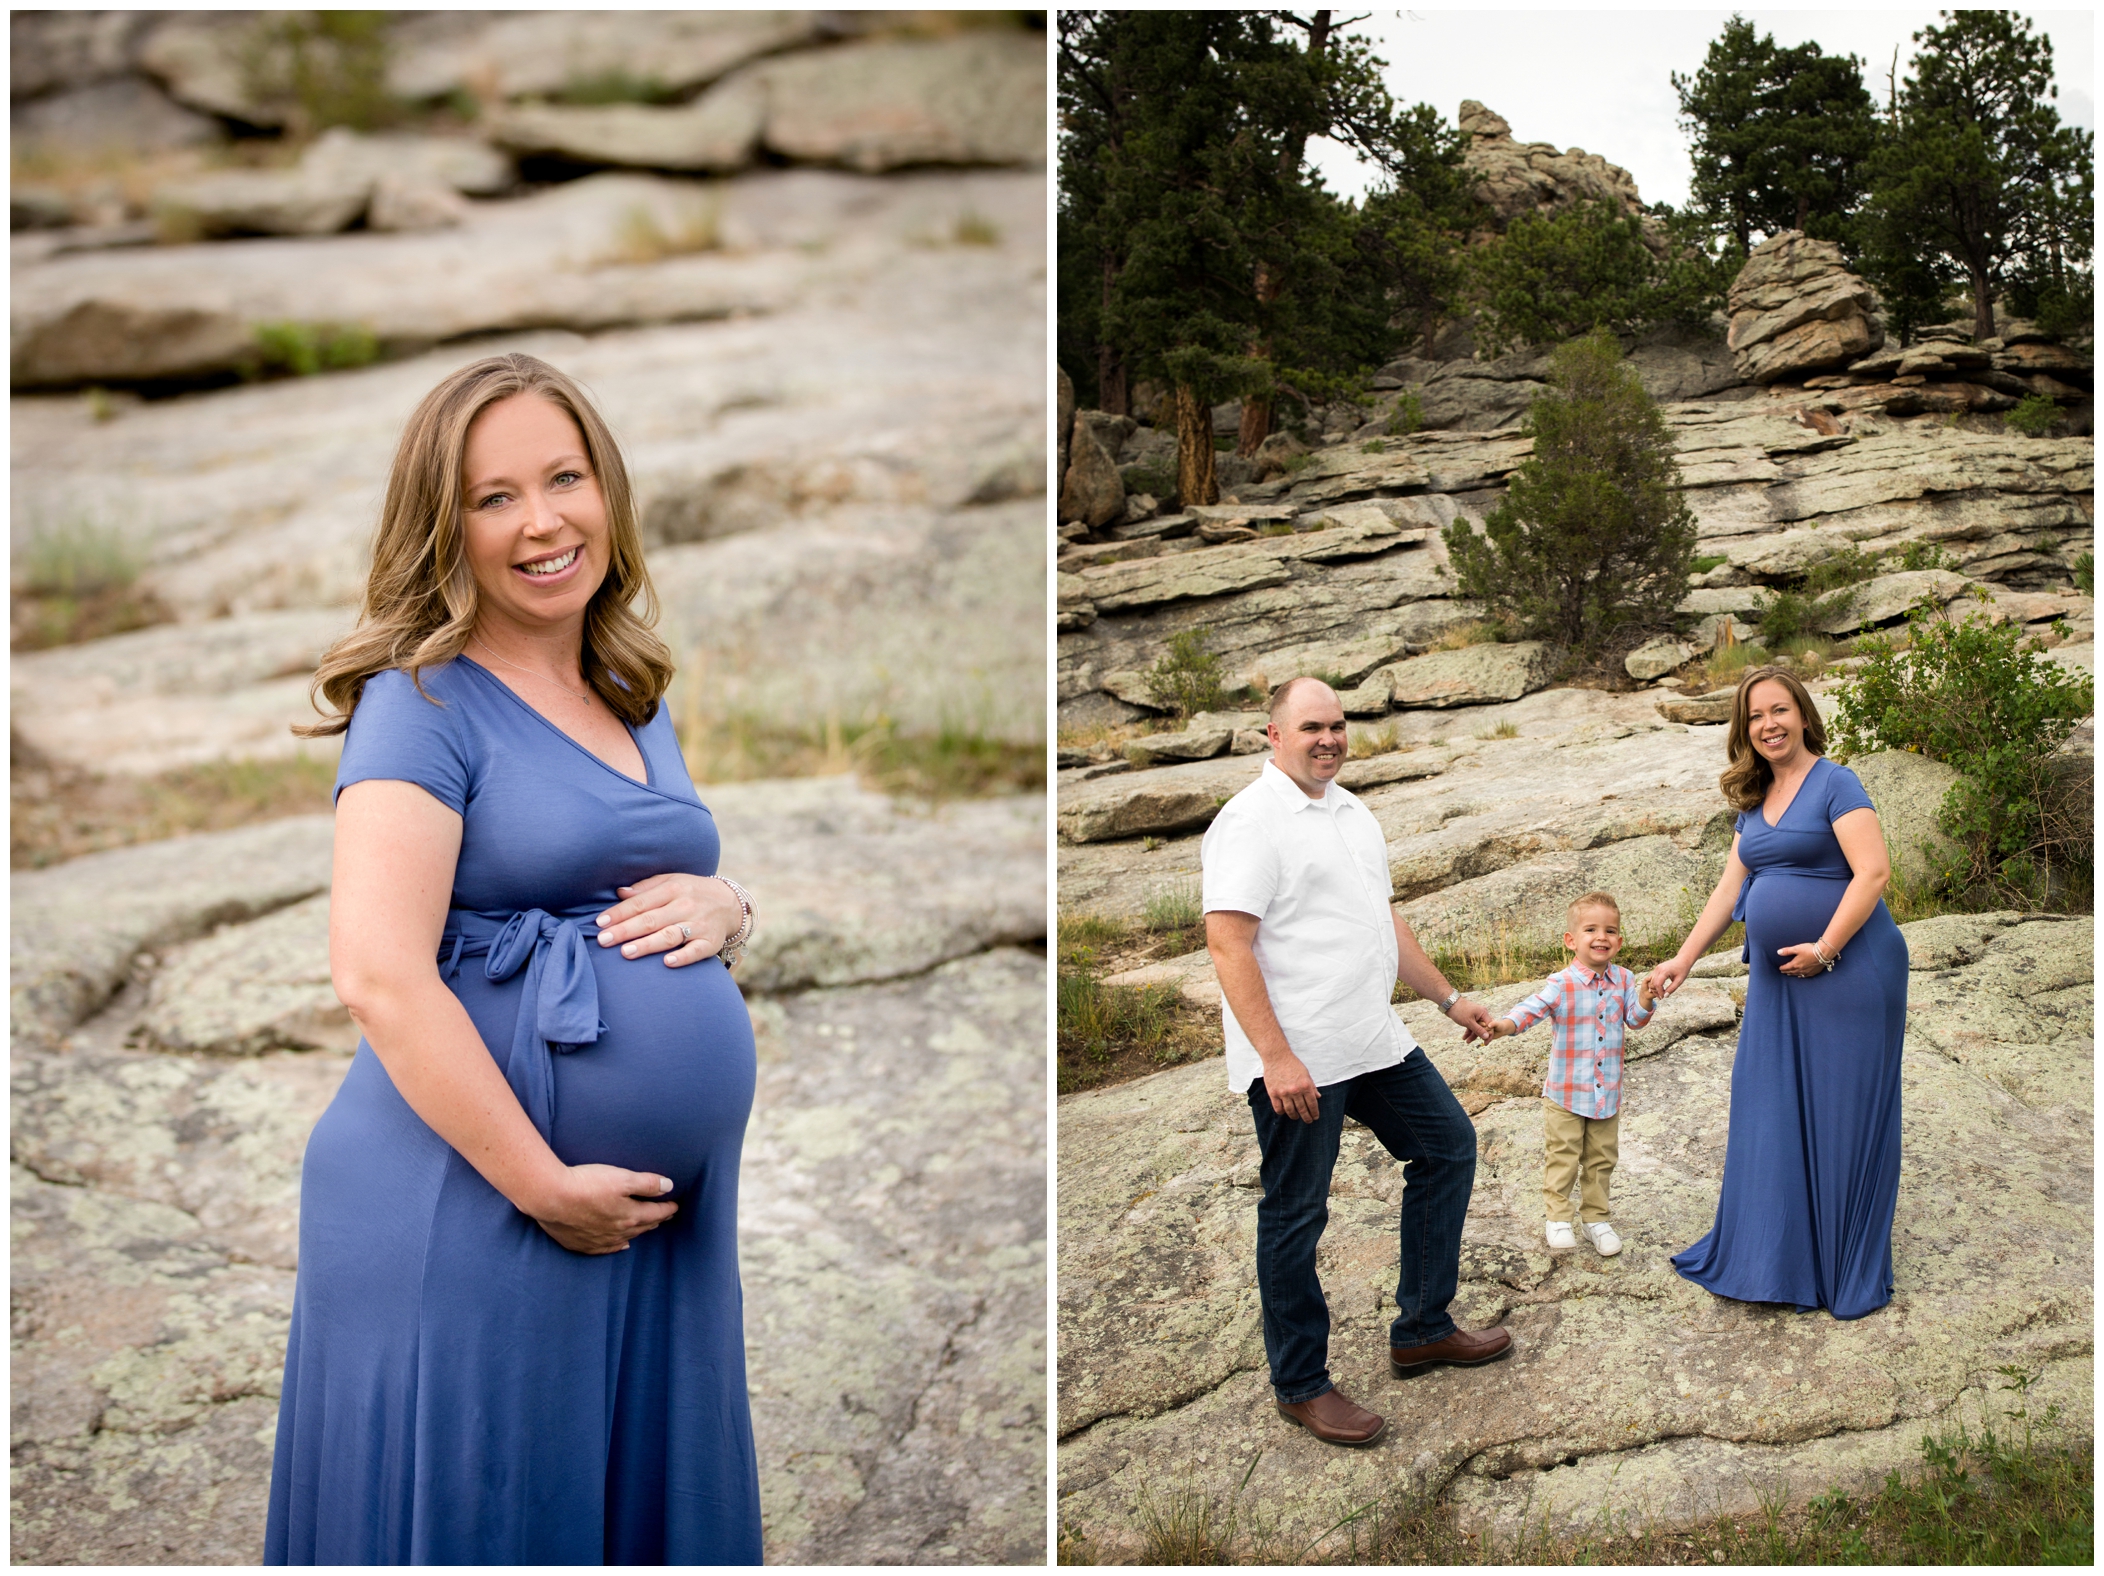 Evergreen Colorado maternity photographs at Alderfer/Three Sisters Park